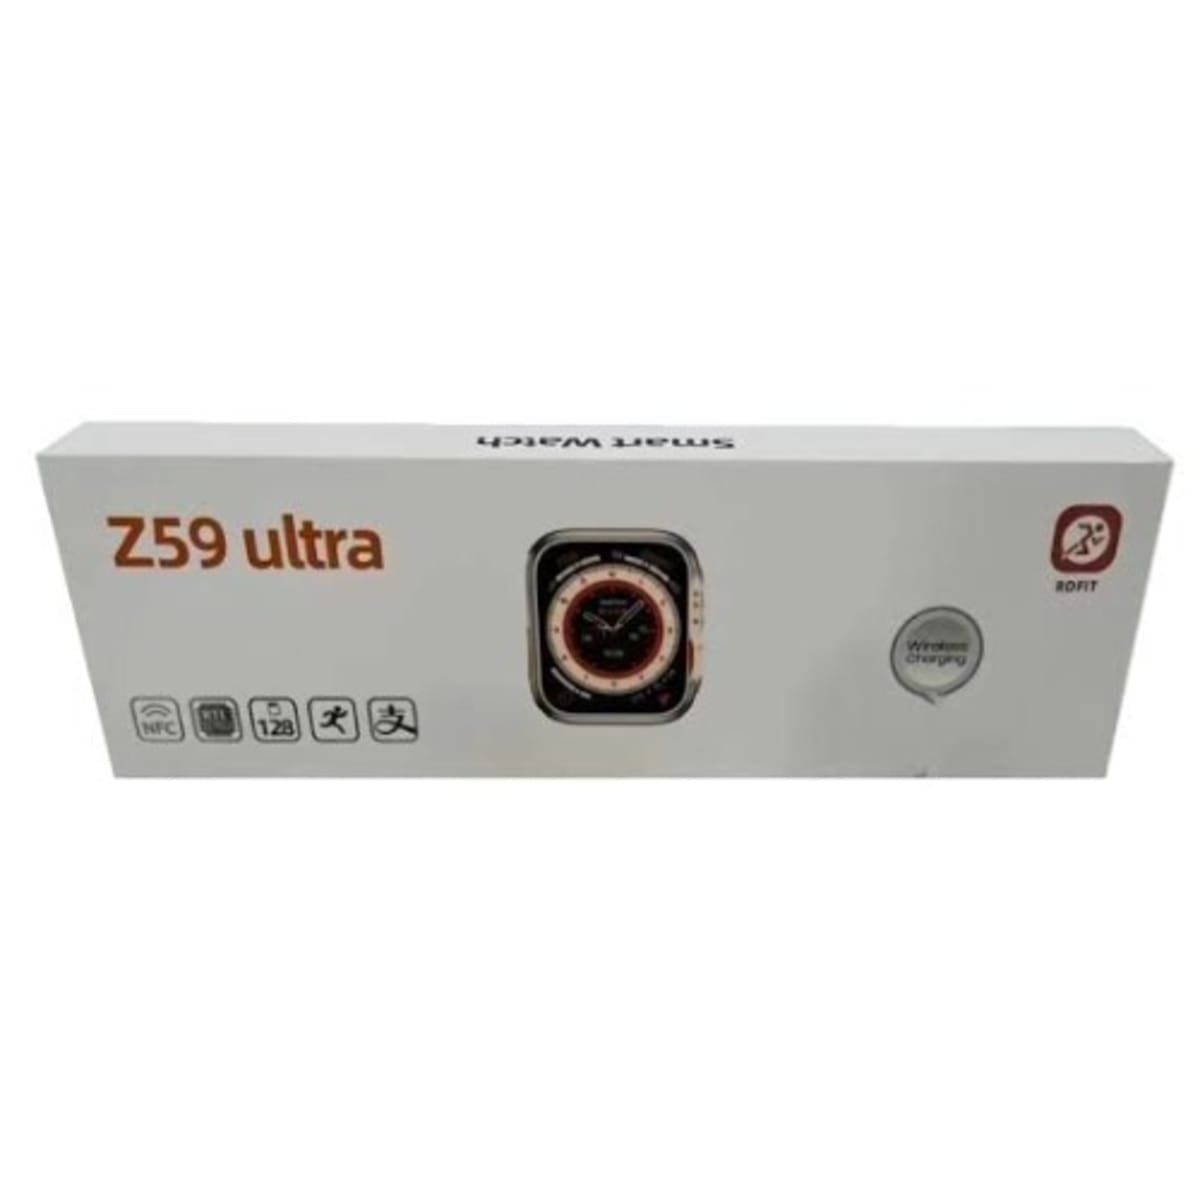 Z59 Ultra Series 8 Waterproof Smartwatch - Nfc 2.02 Display - Bt Call -  Wireless Charging